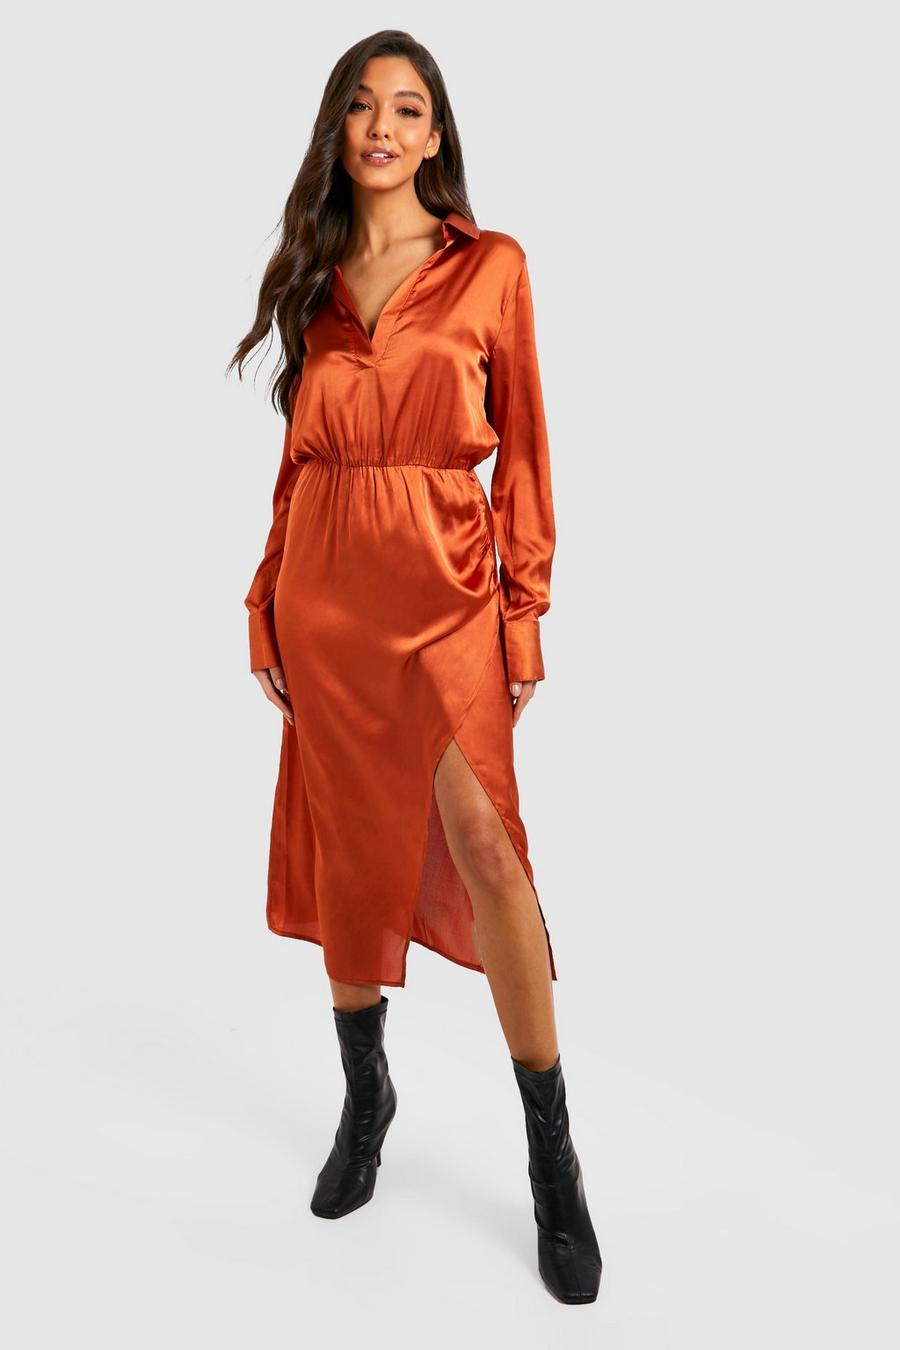 Rust orange The Satin Midaxi Dress